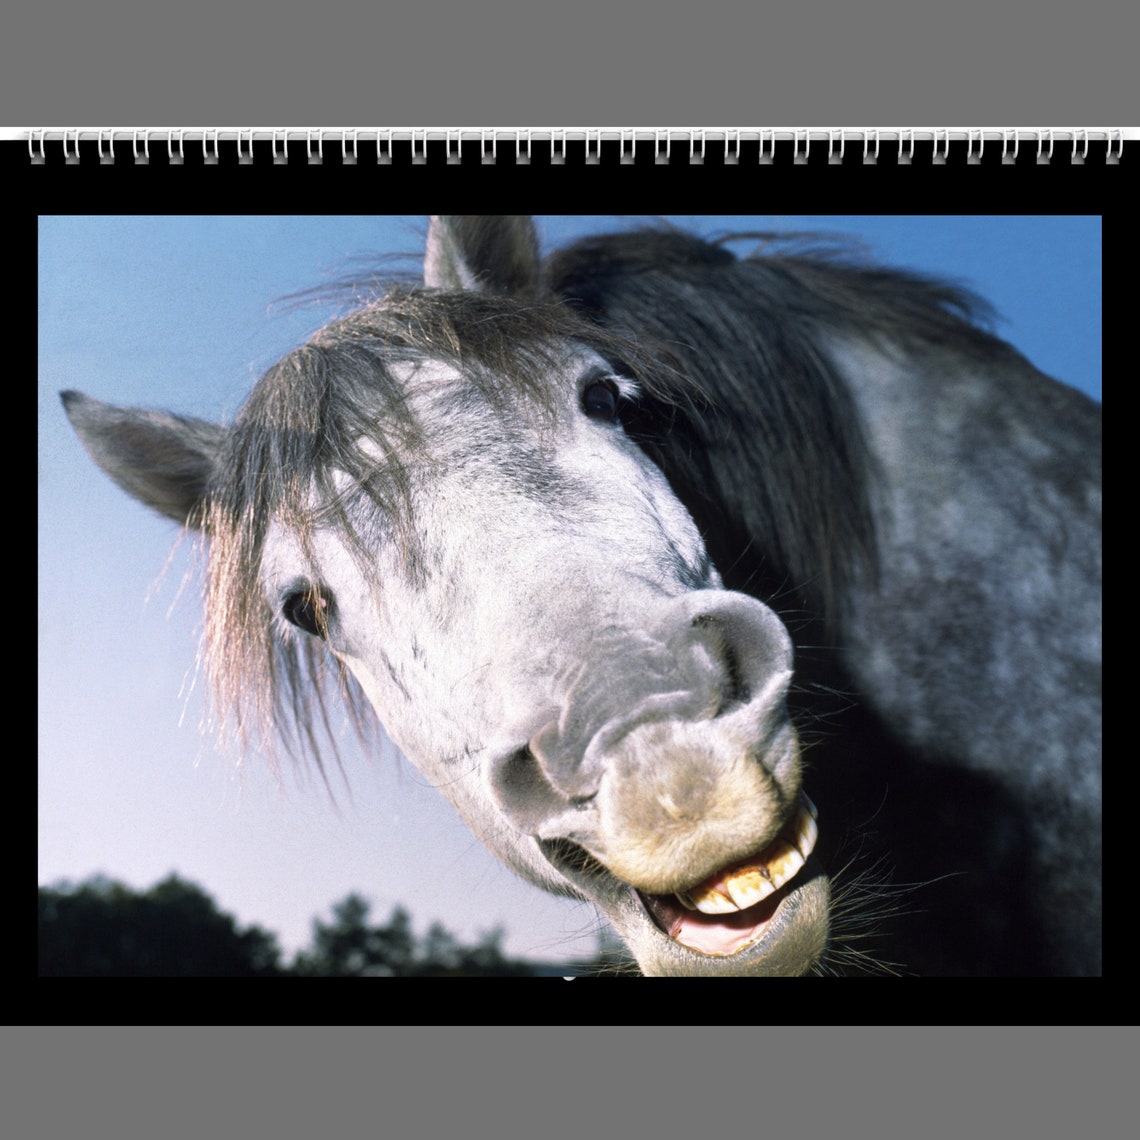 Horse Calendar 2023 Gift Idea for Horse Lovers Wall Calendar - Etsy